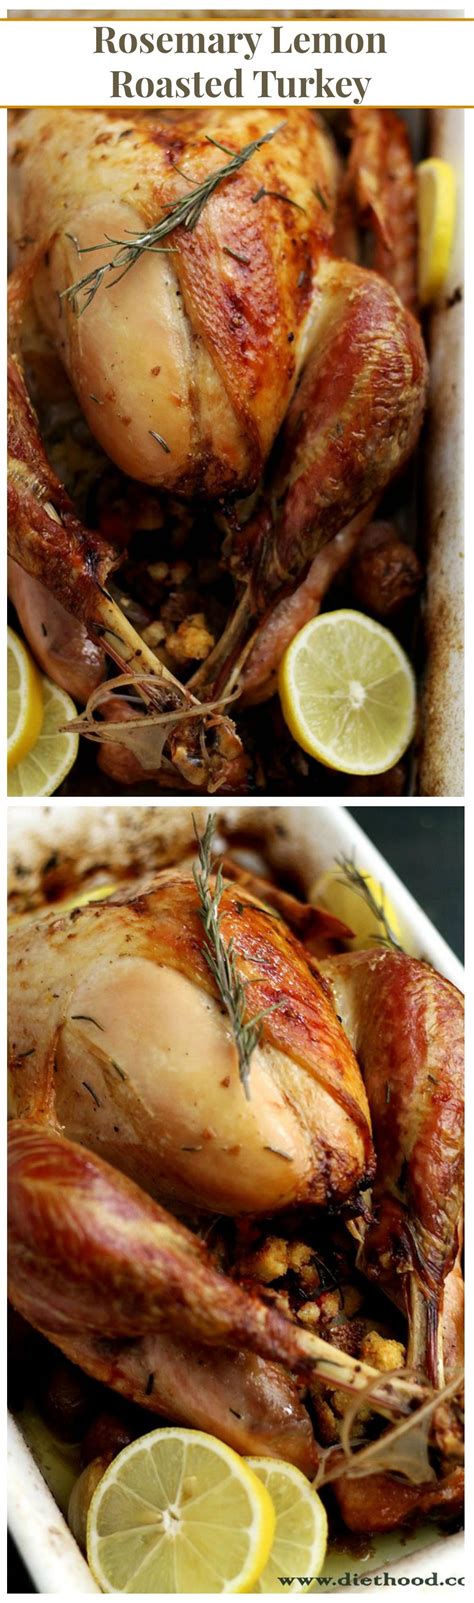 rosemary lemon roasted turkey made with infused rosemary lemon olive oil garlic and stuffing